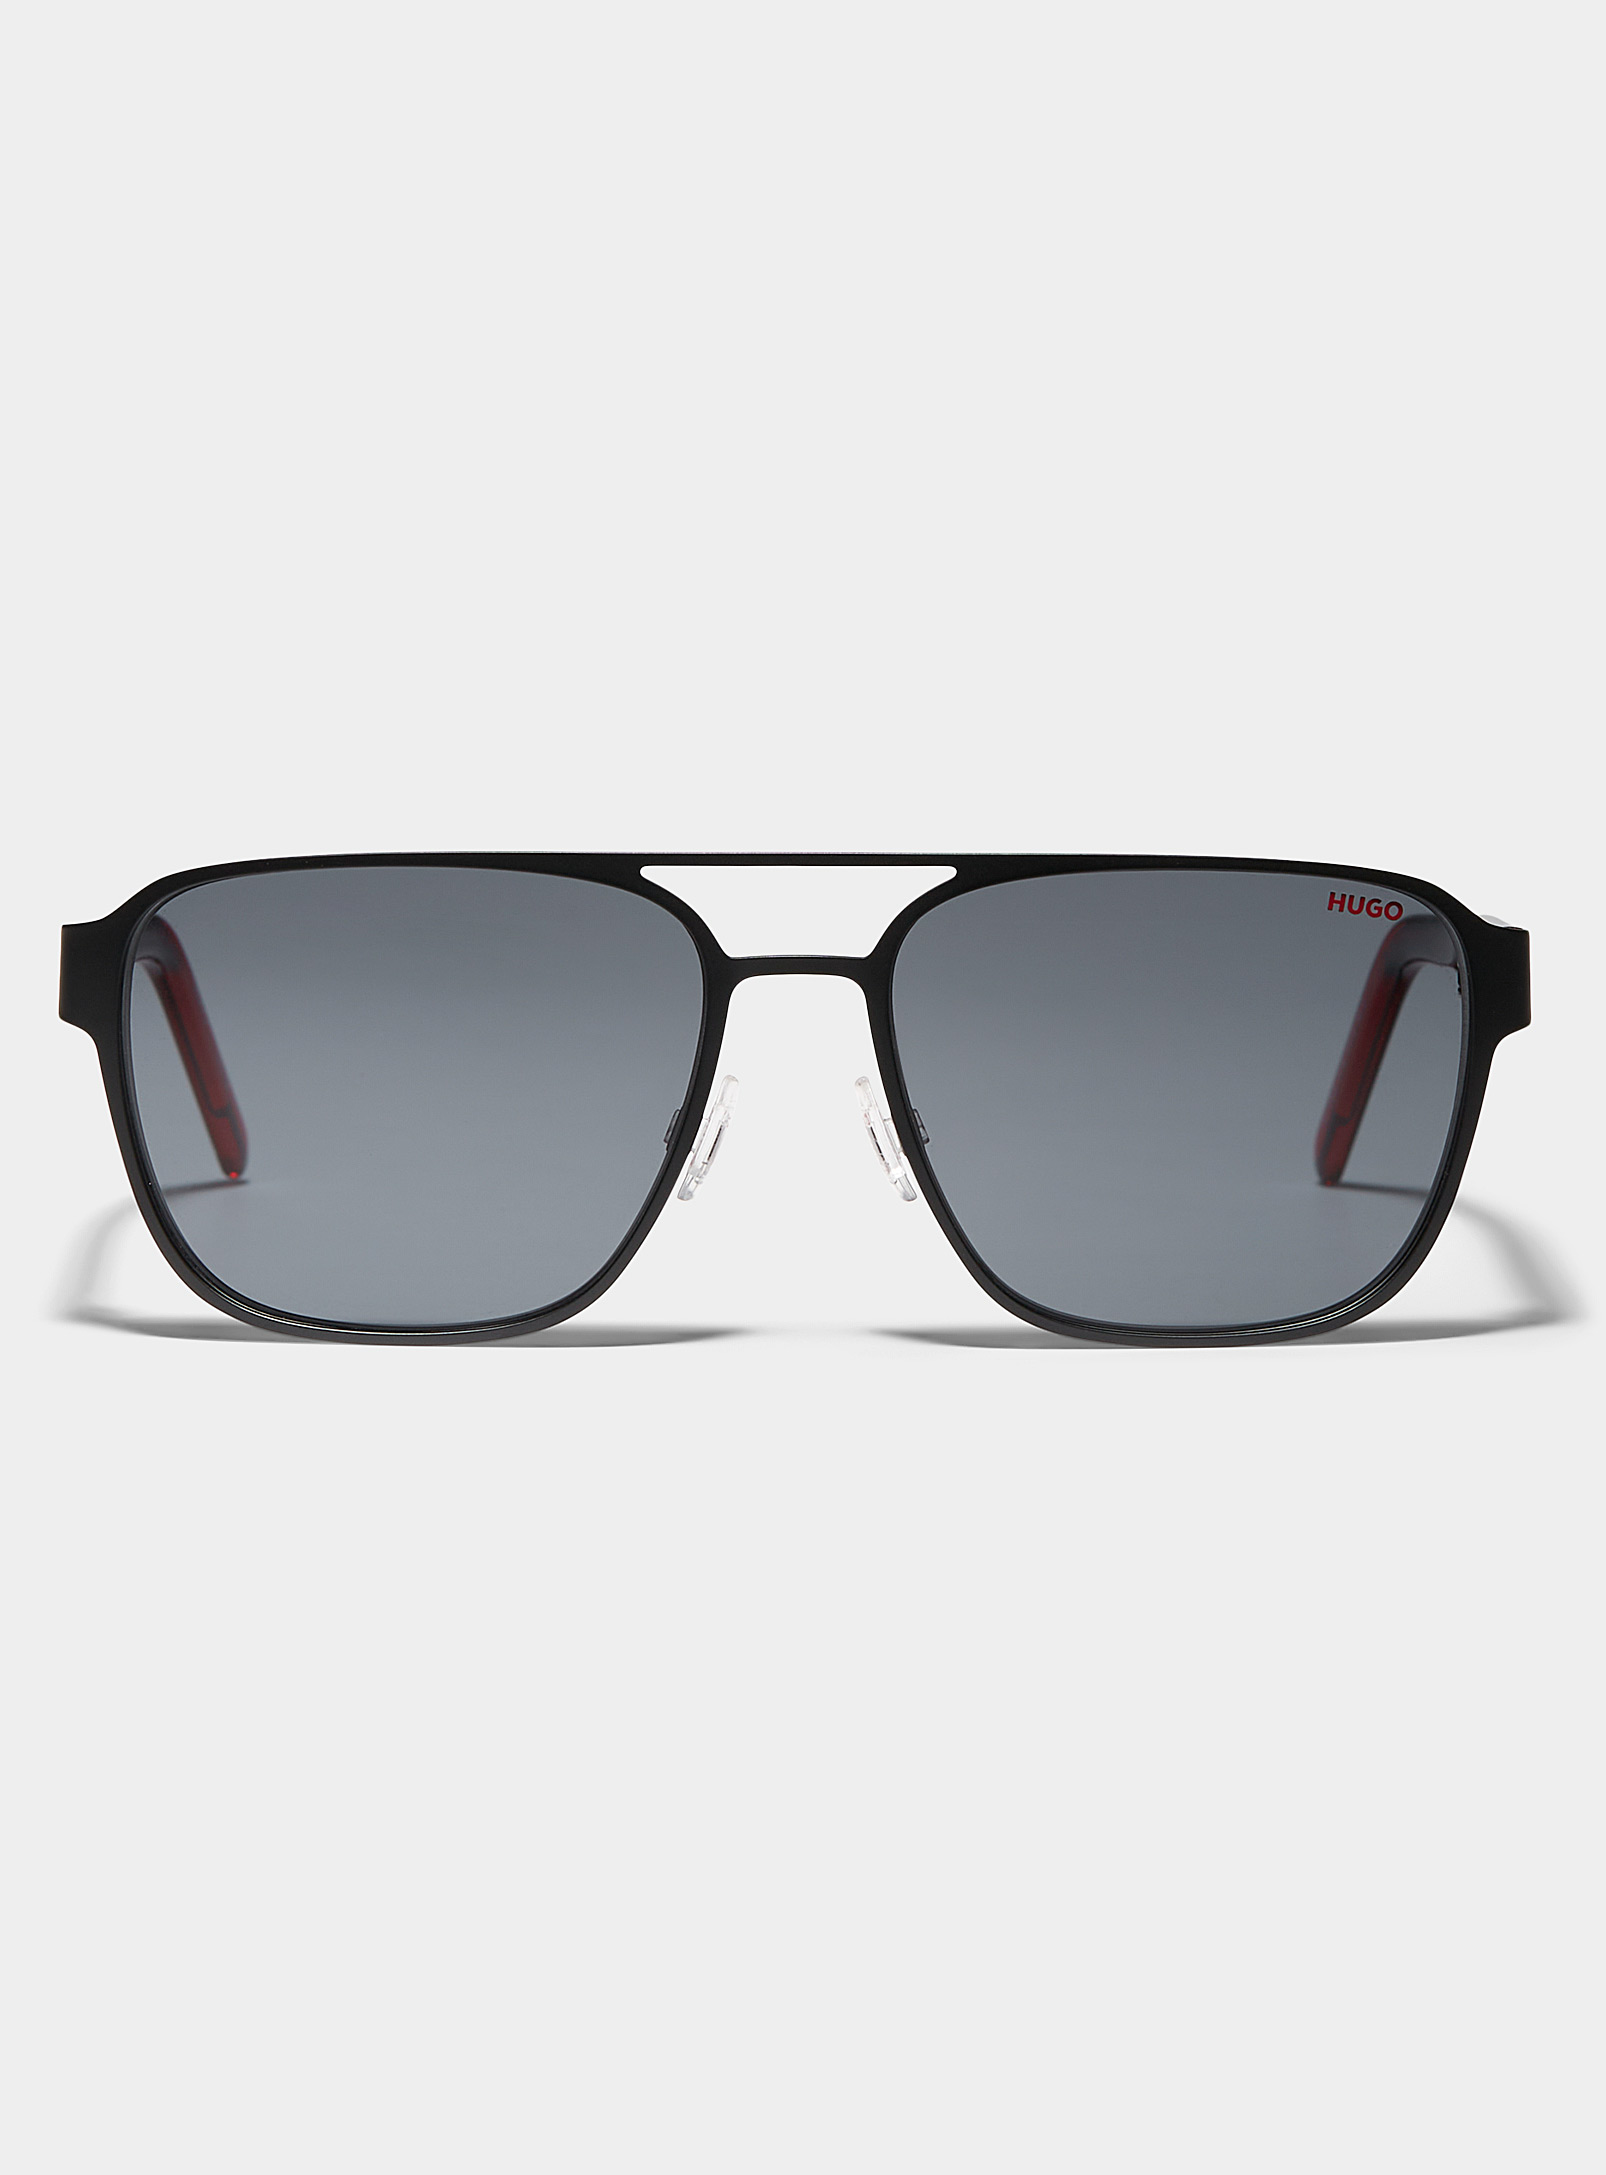 HUGO - Men's Red-and-black temple aviator sunglasses